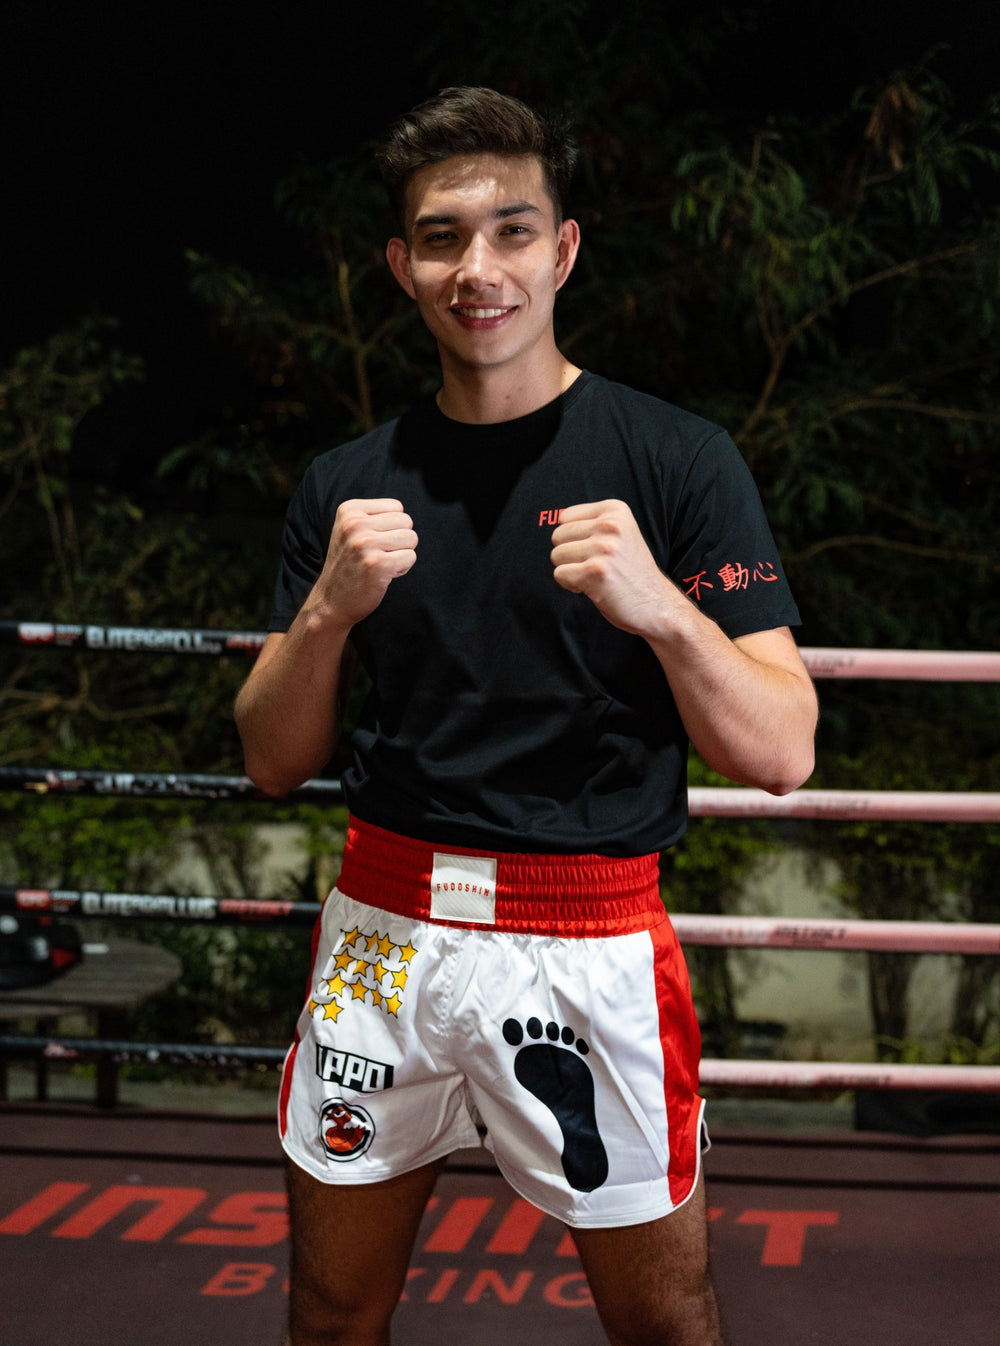 'The Boxer' Muay Thai Shorts - Fudoshin